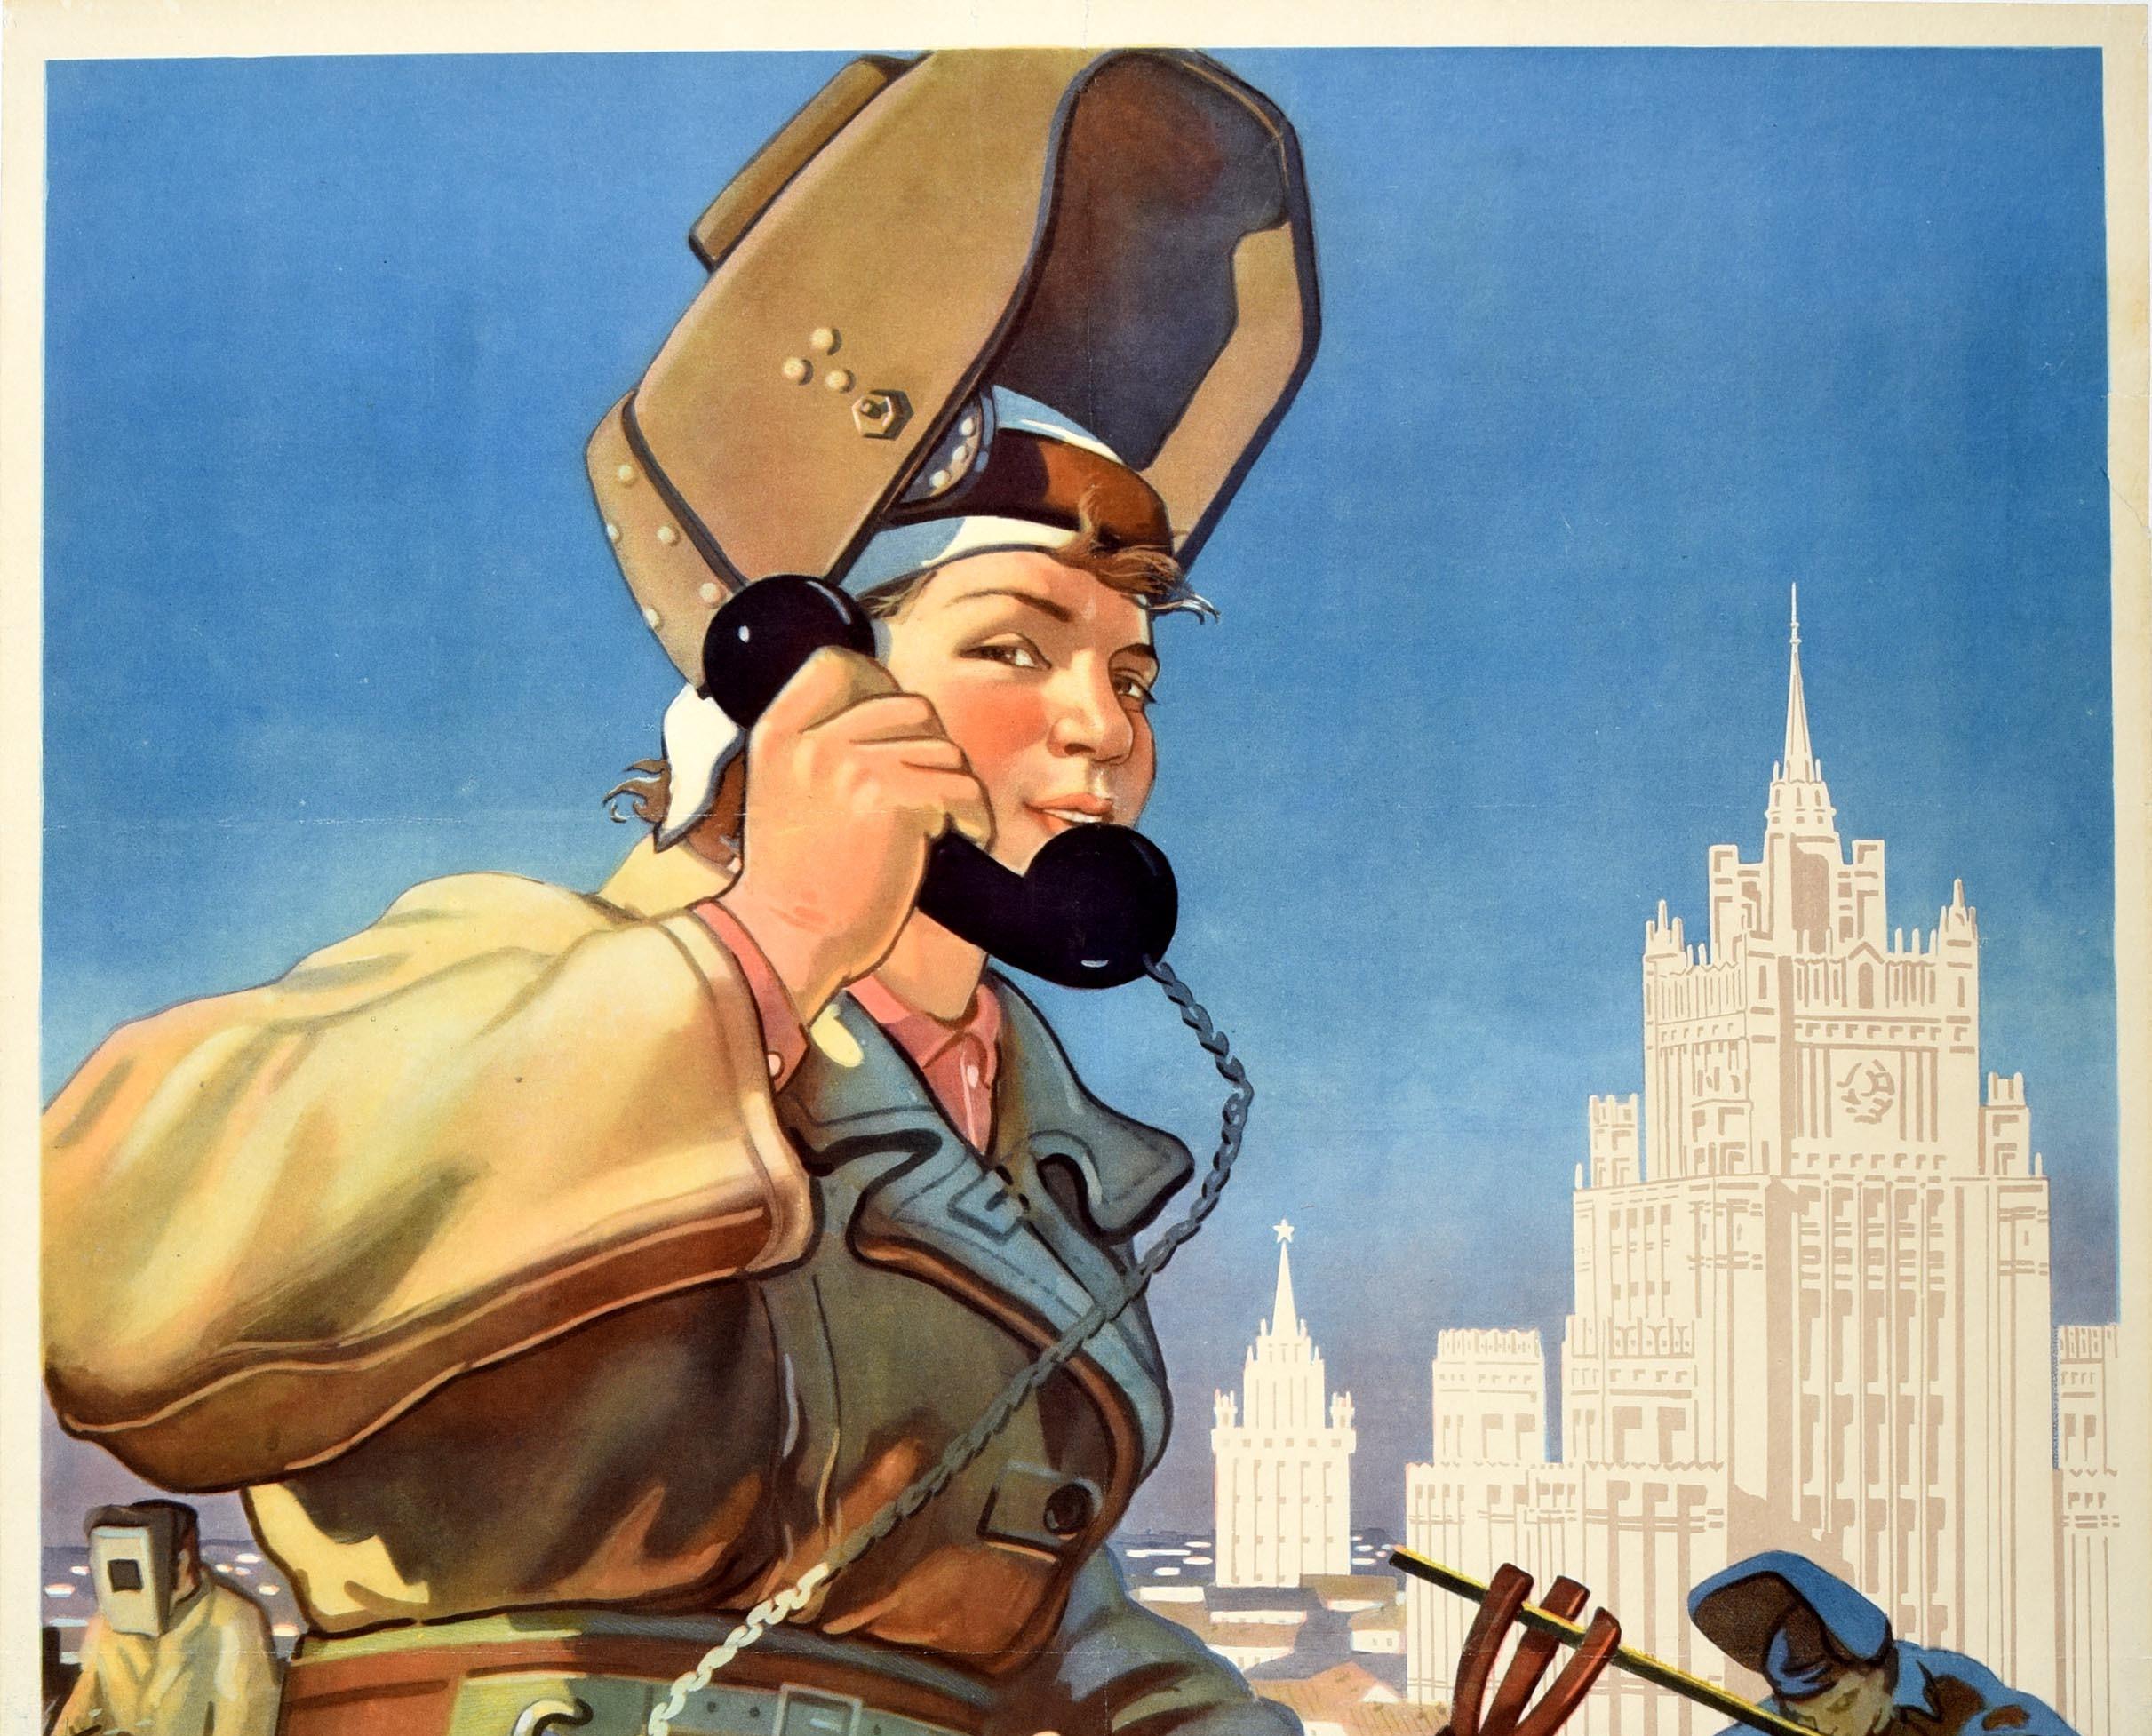 Original Vintage Soviet Poster Work Quota Plan Moscow Construction Welder USSR - Print by Savostyuk